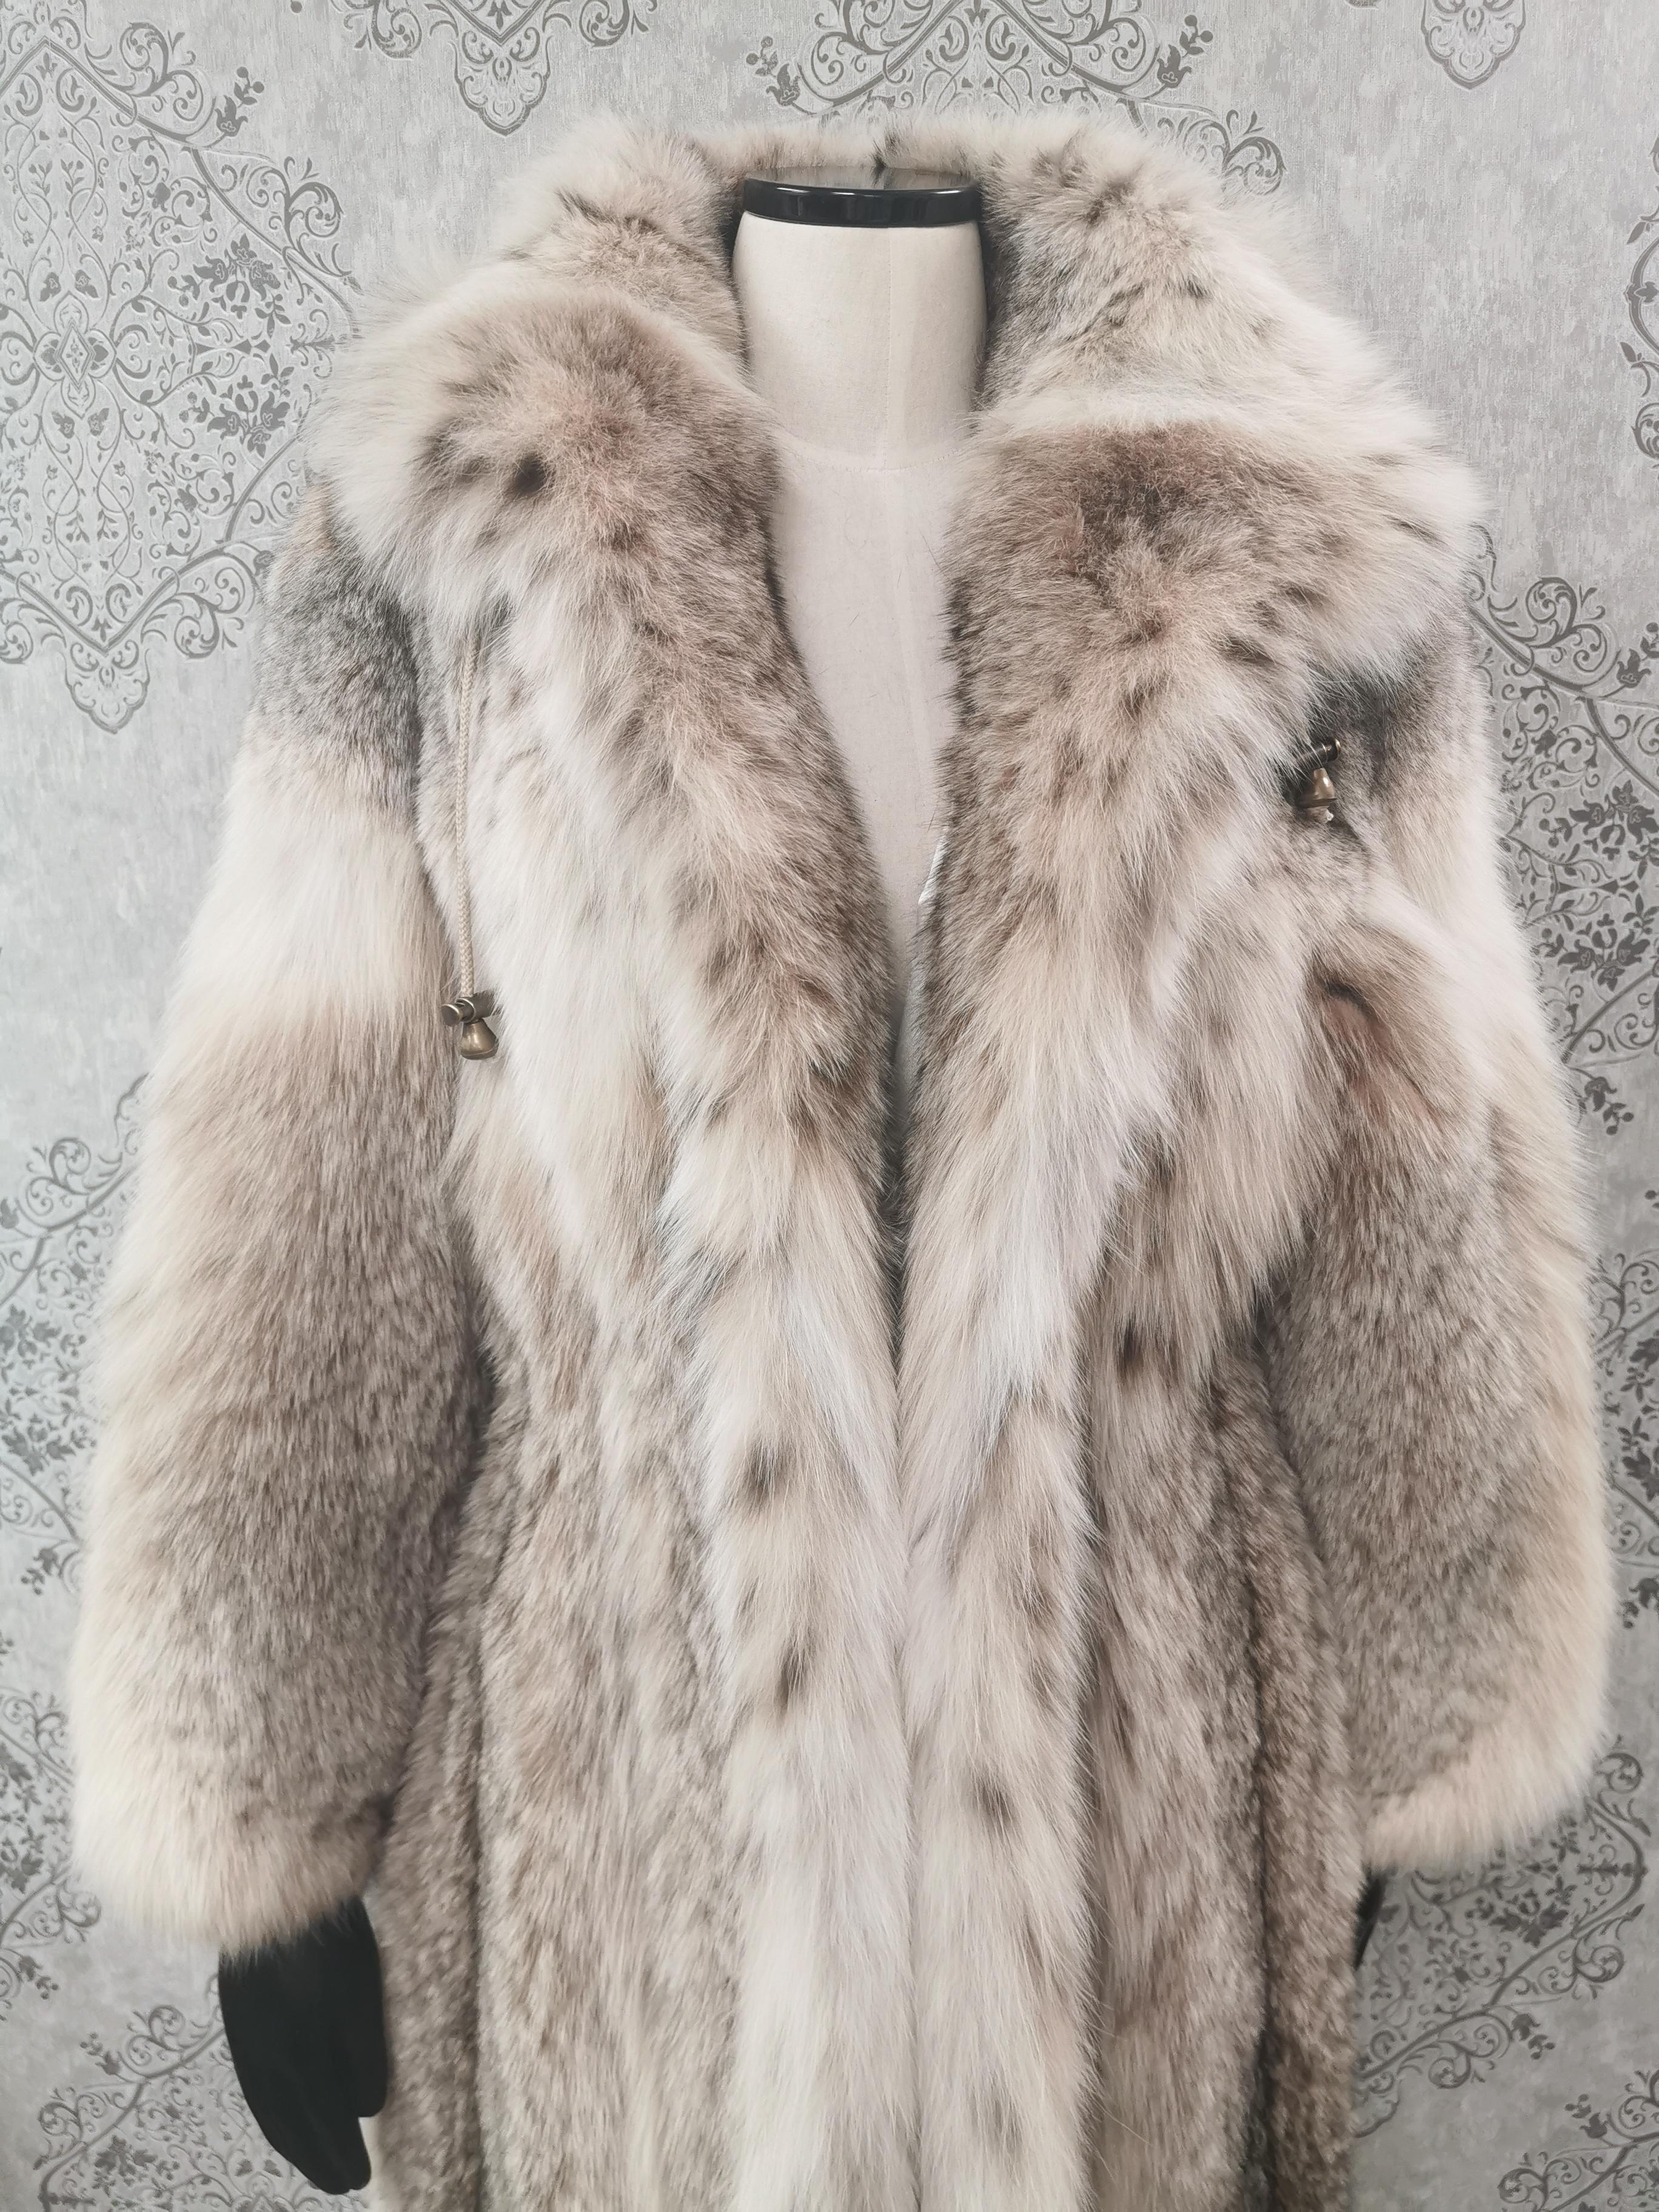 DESCRIPTION : Brand new Montana lynx fur coat with detachable hood size 14 L

Tailored collar, straight sleeves, integraded belt, detachable hood, supple skins, beautiful fresh fur, european german clasps for closure, too slit pockets, nice big full